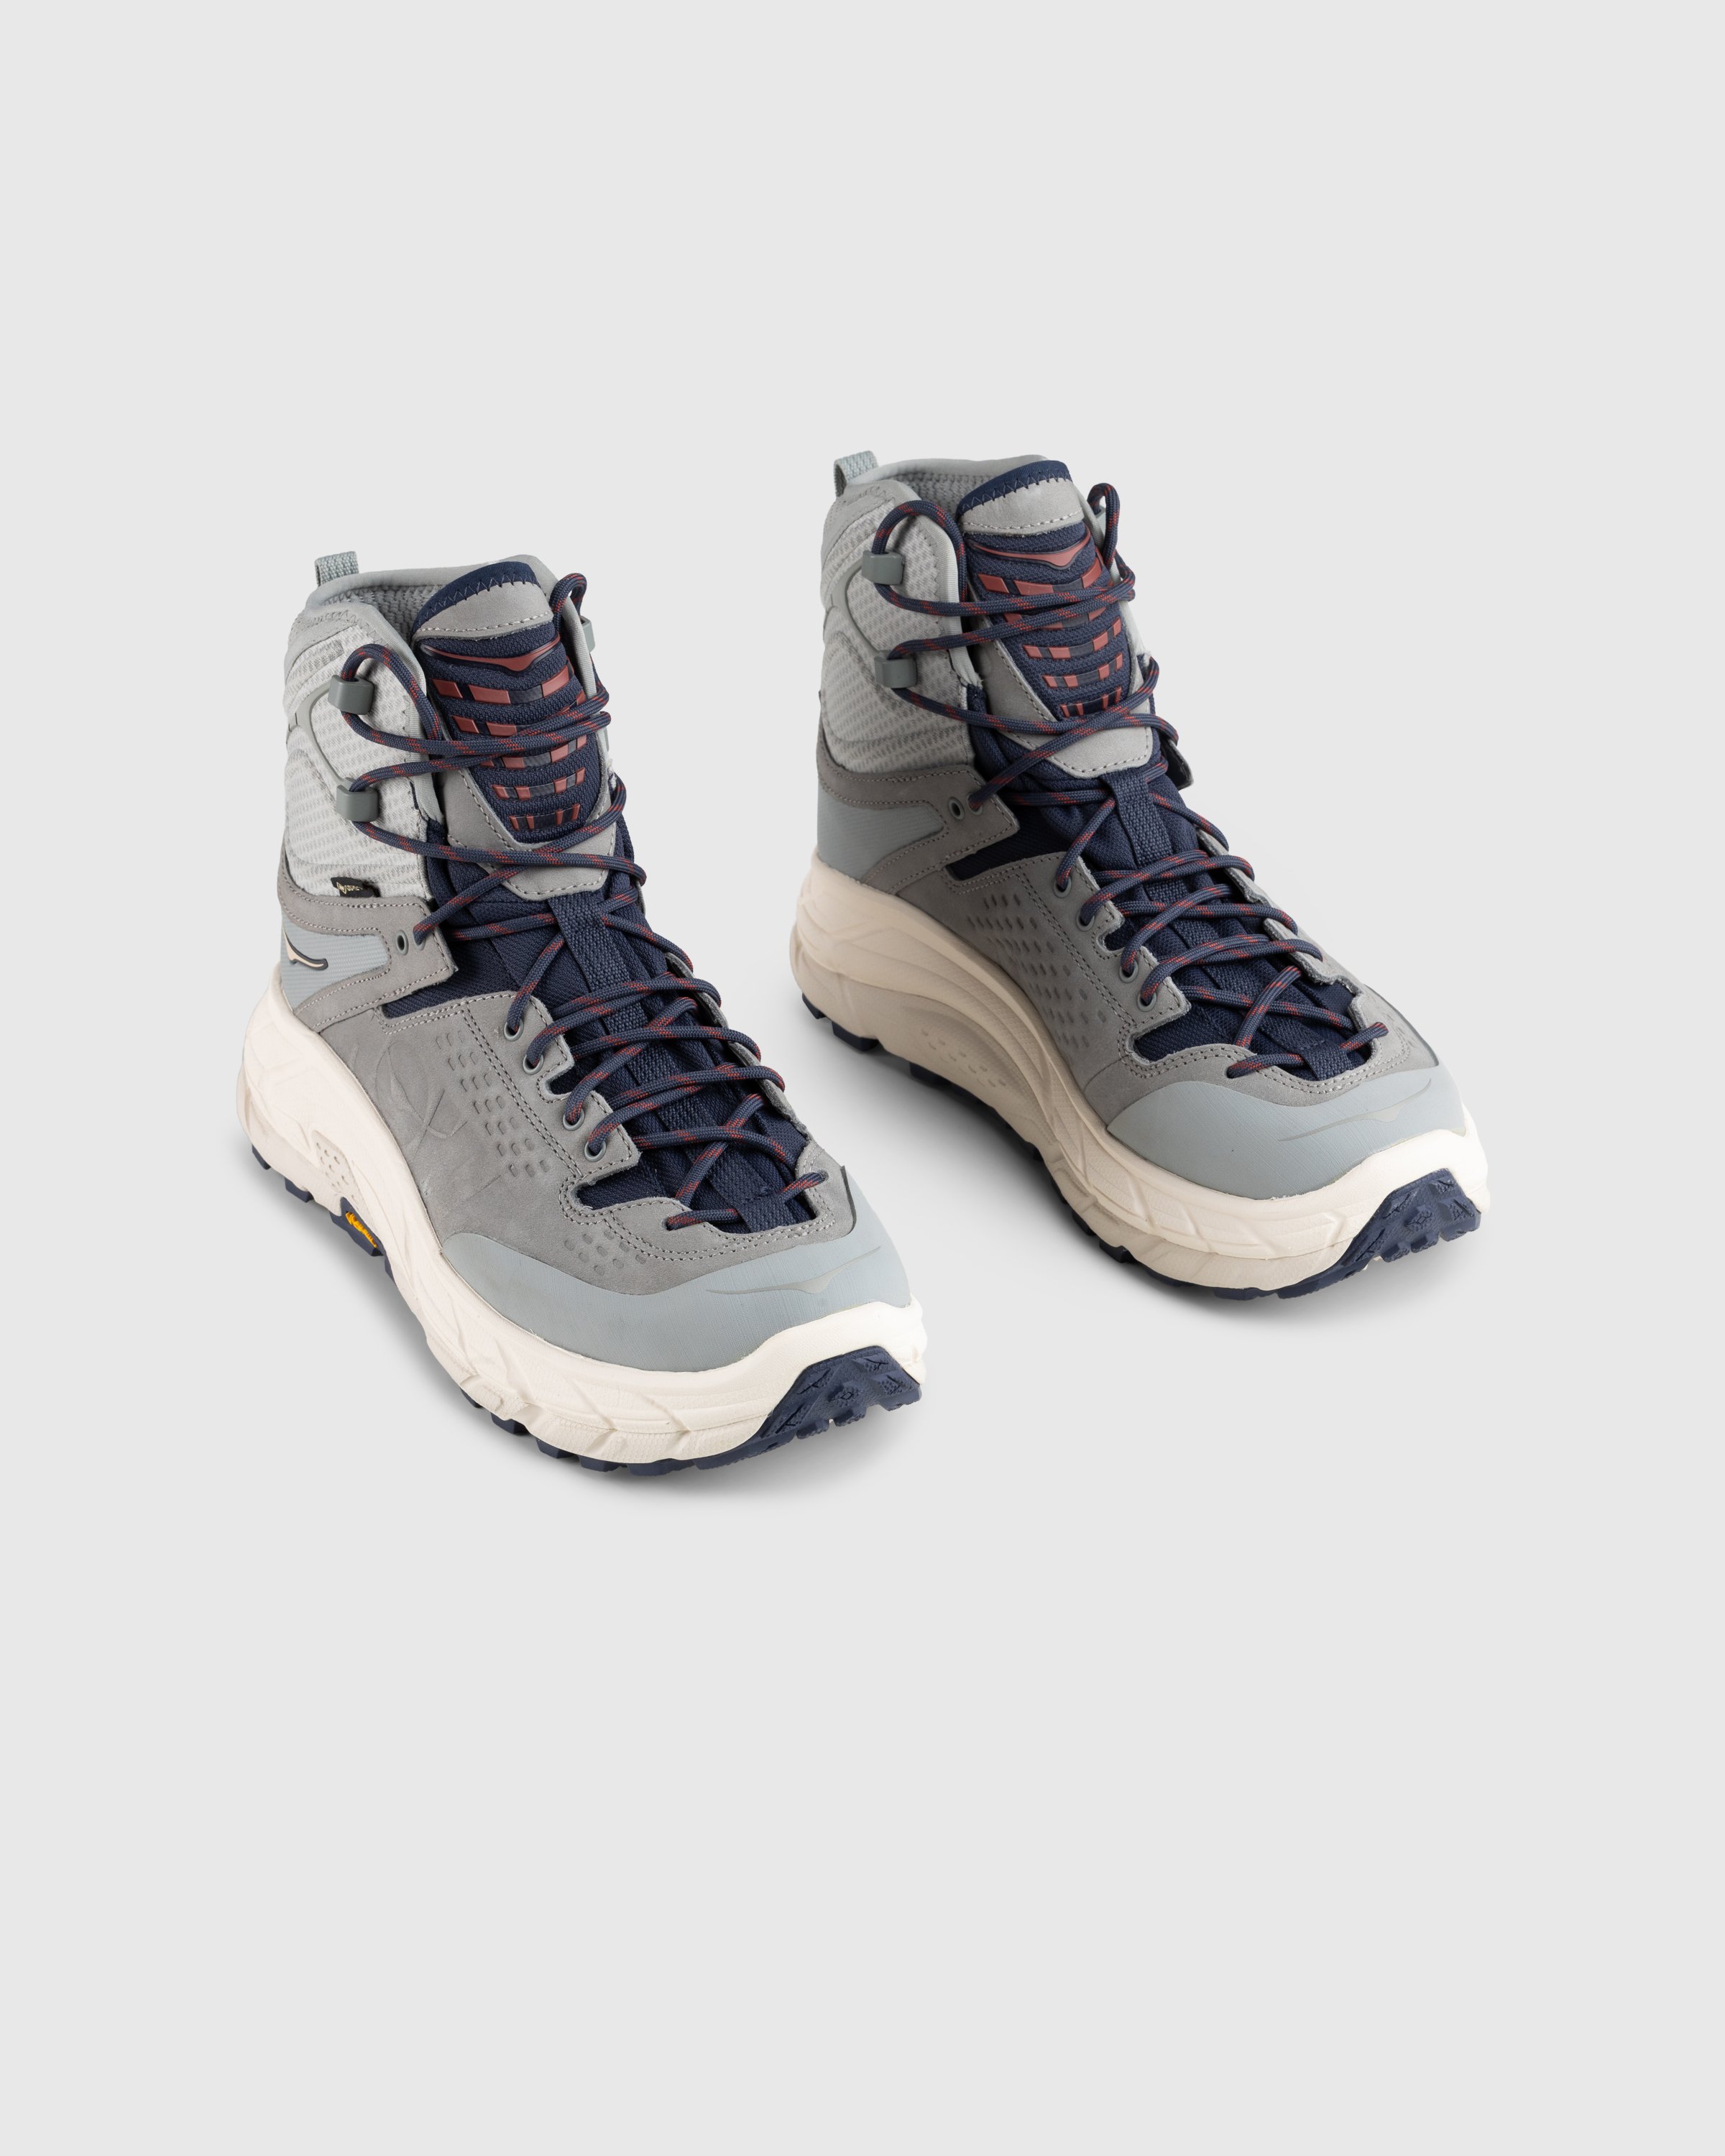 HOKA - Tor Ultra Hi Limestone/Shifting Sand - Footwear - Beige - Image 3